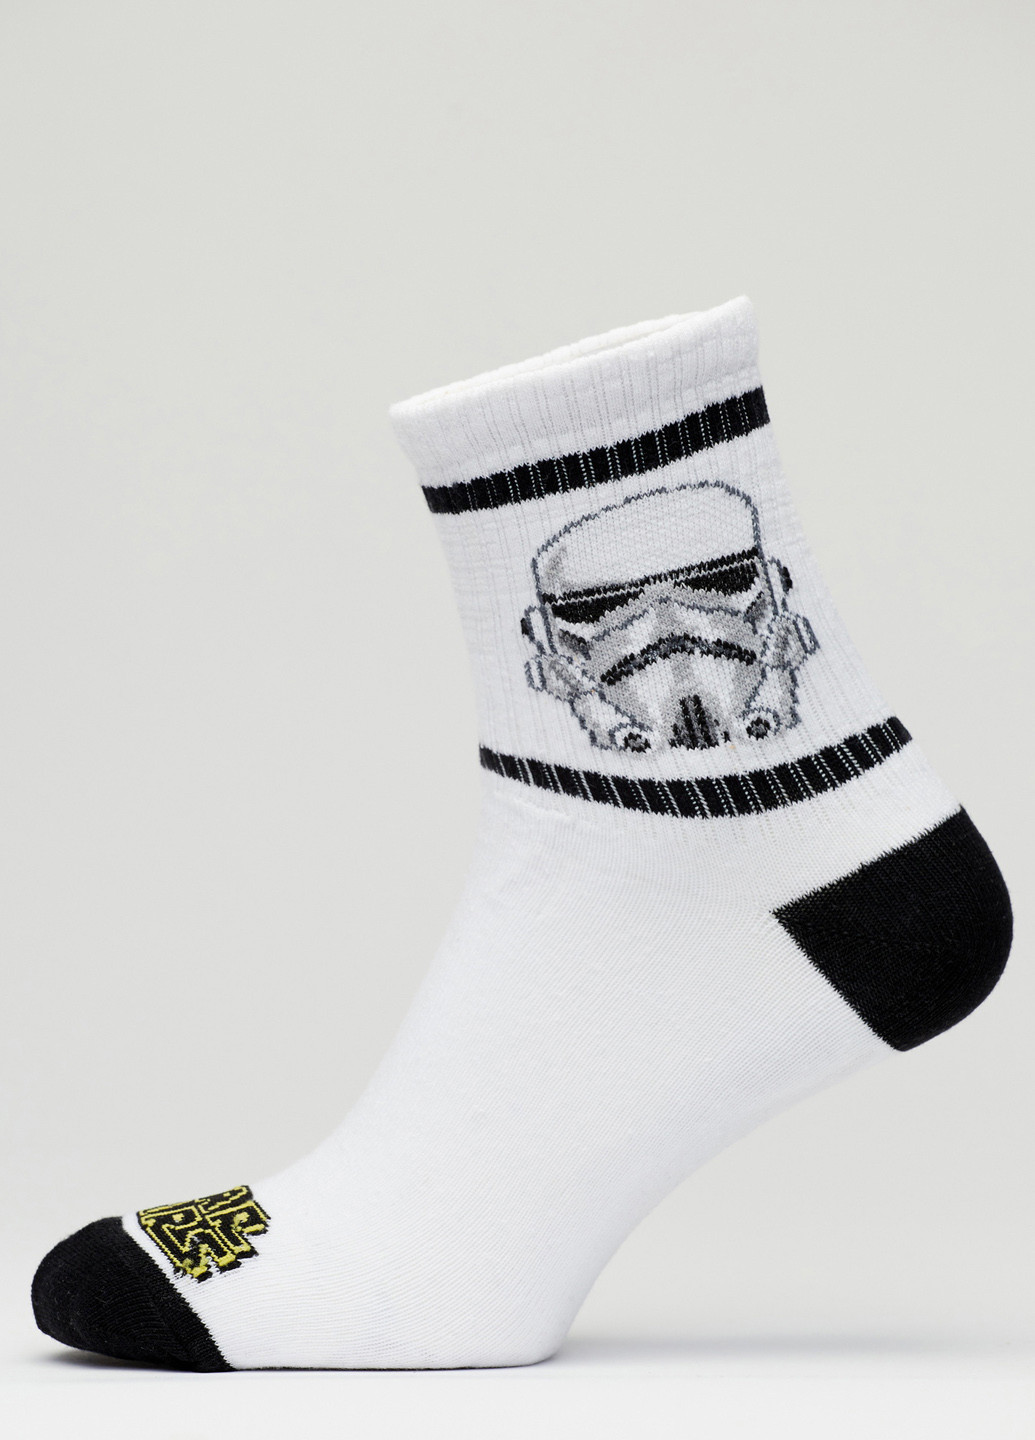 Носки Star Wars Штурмовик Rock'n'socks белые повседневные